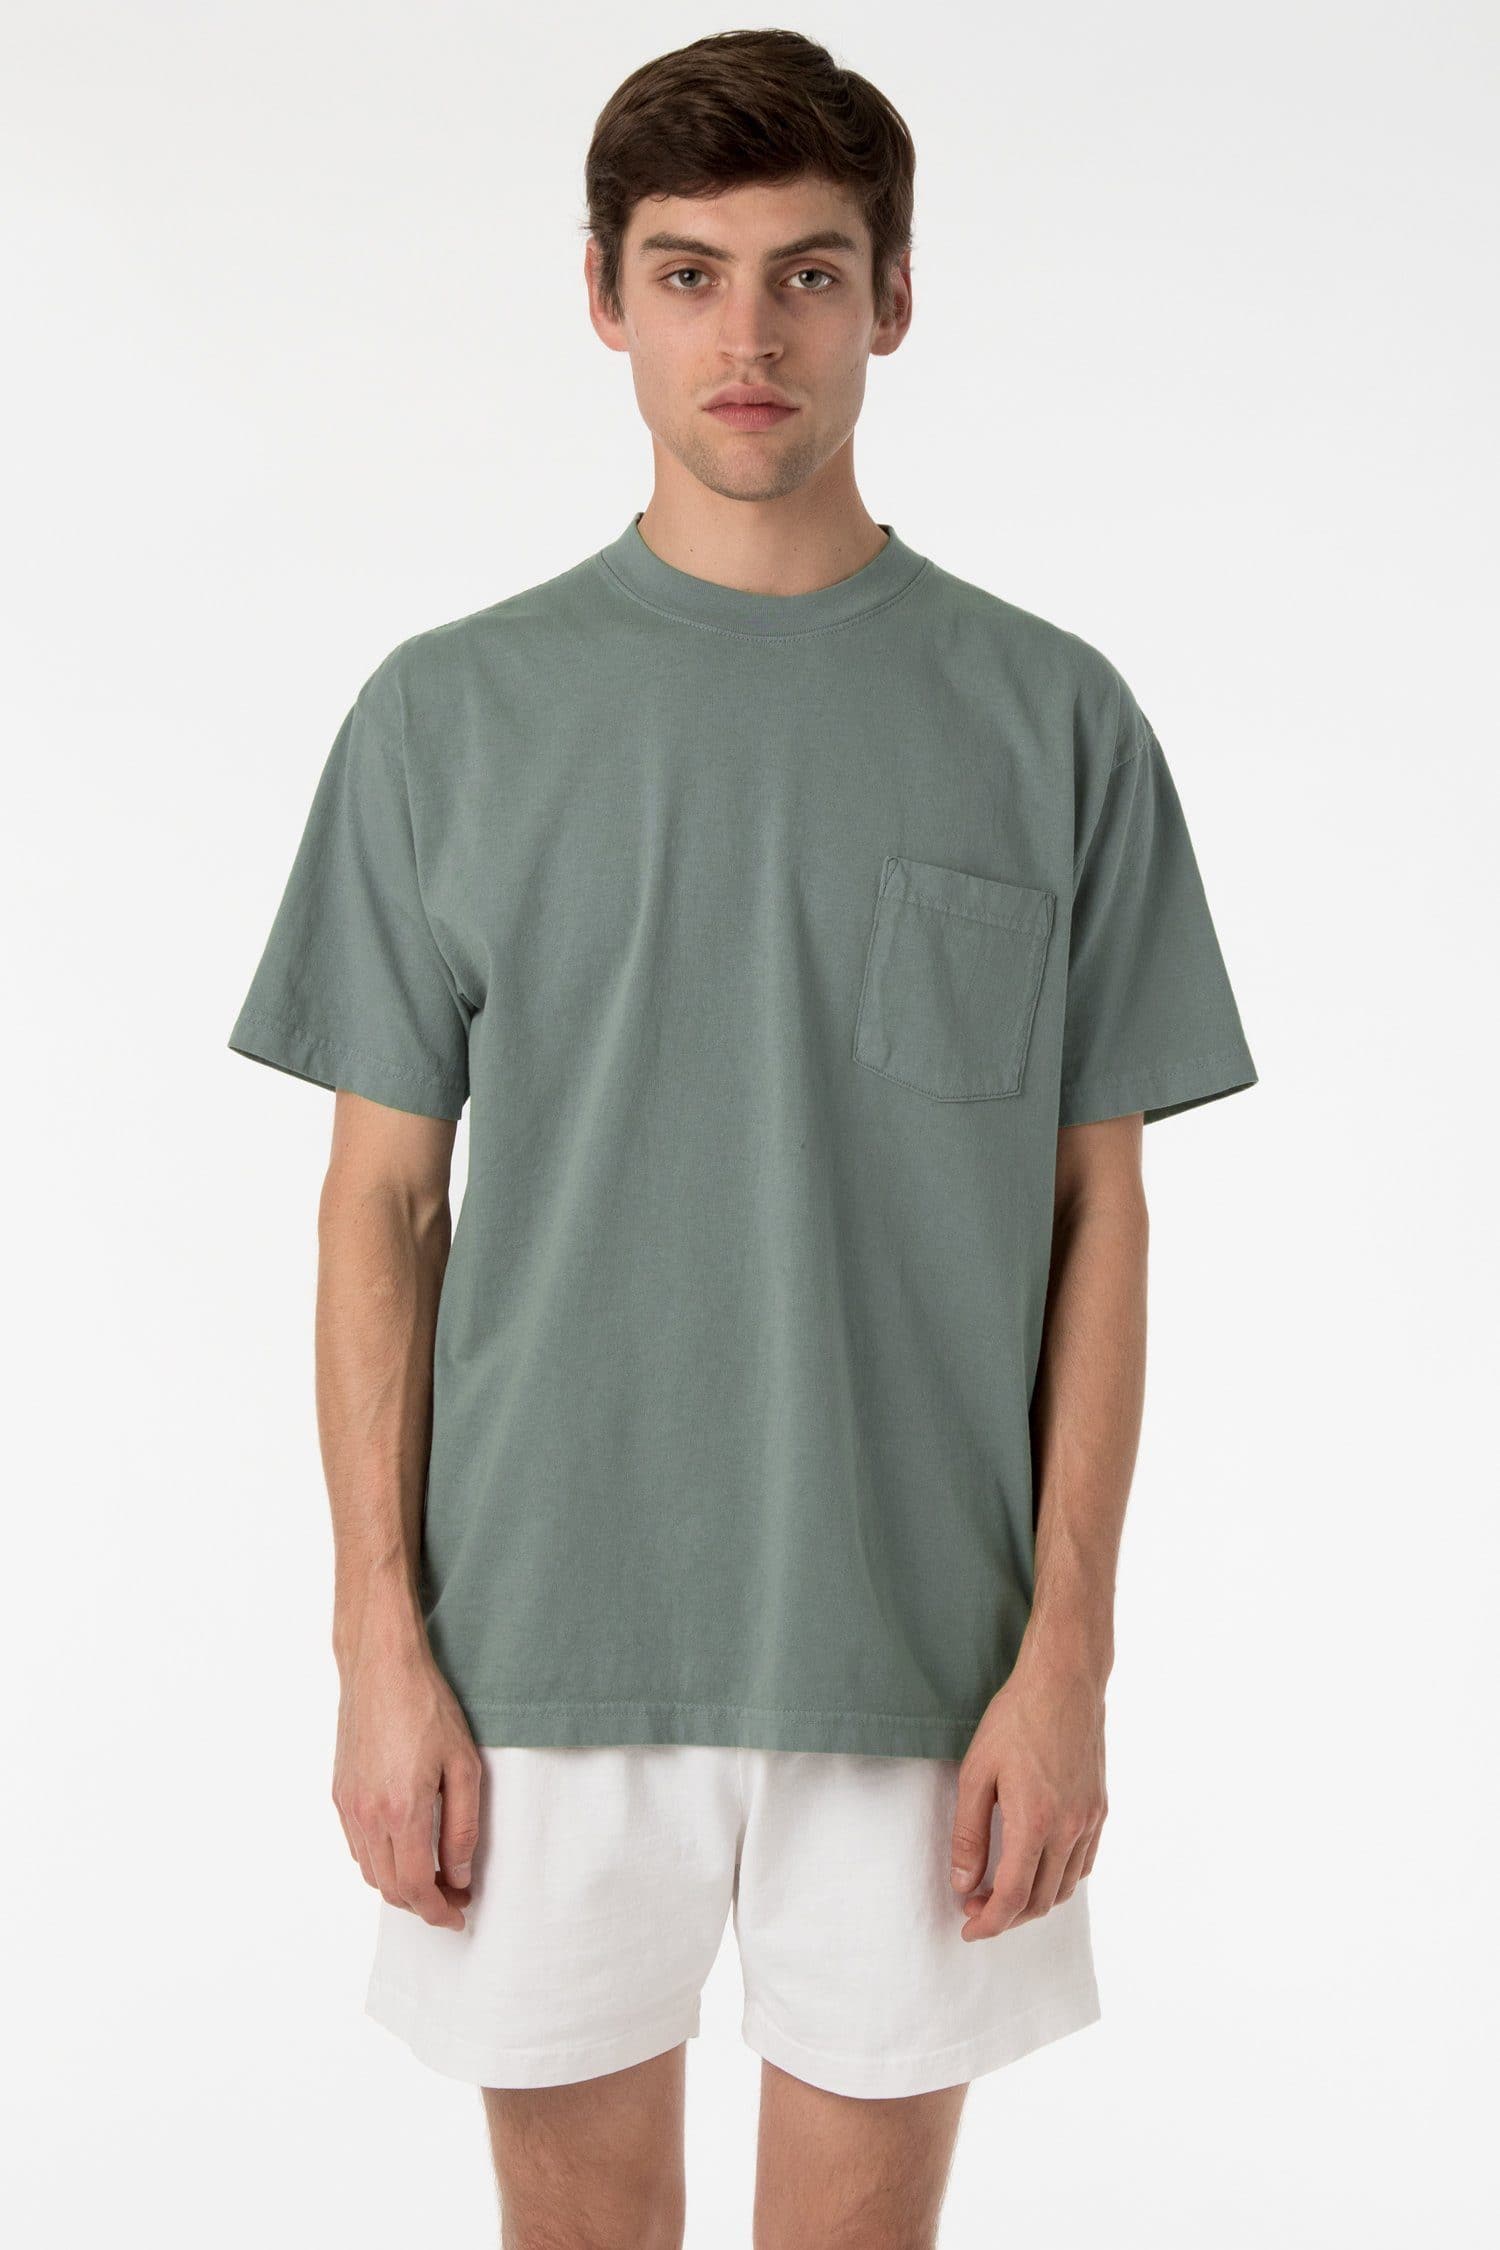 Los Angeles 1809GD Garment Dye Pocket T-Shirt - Mock It